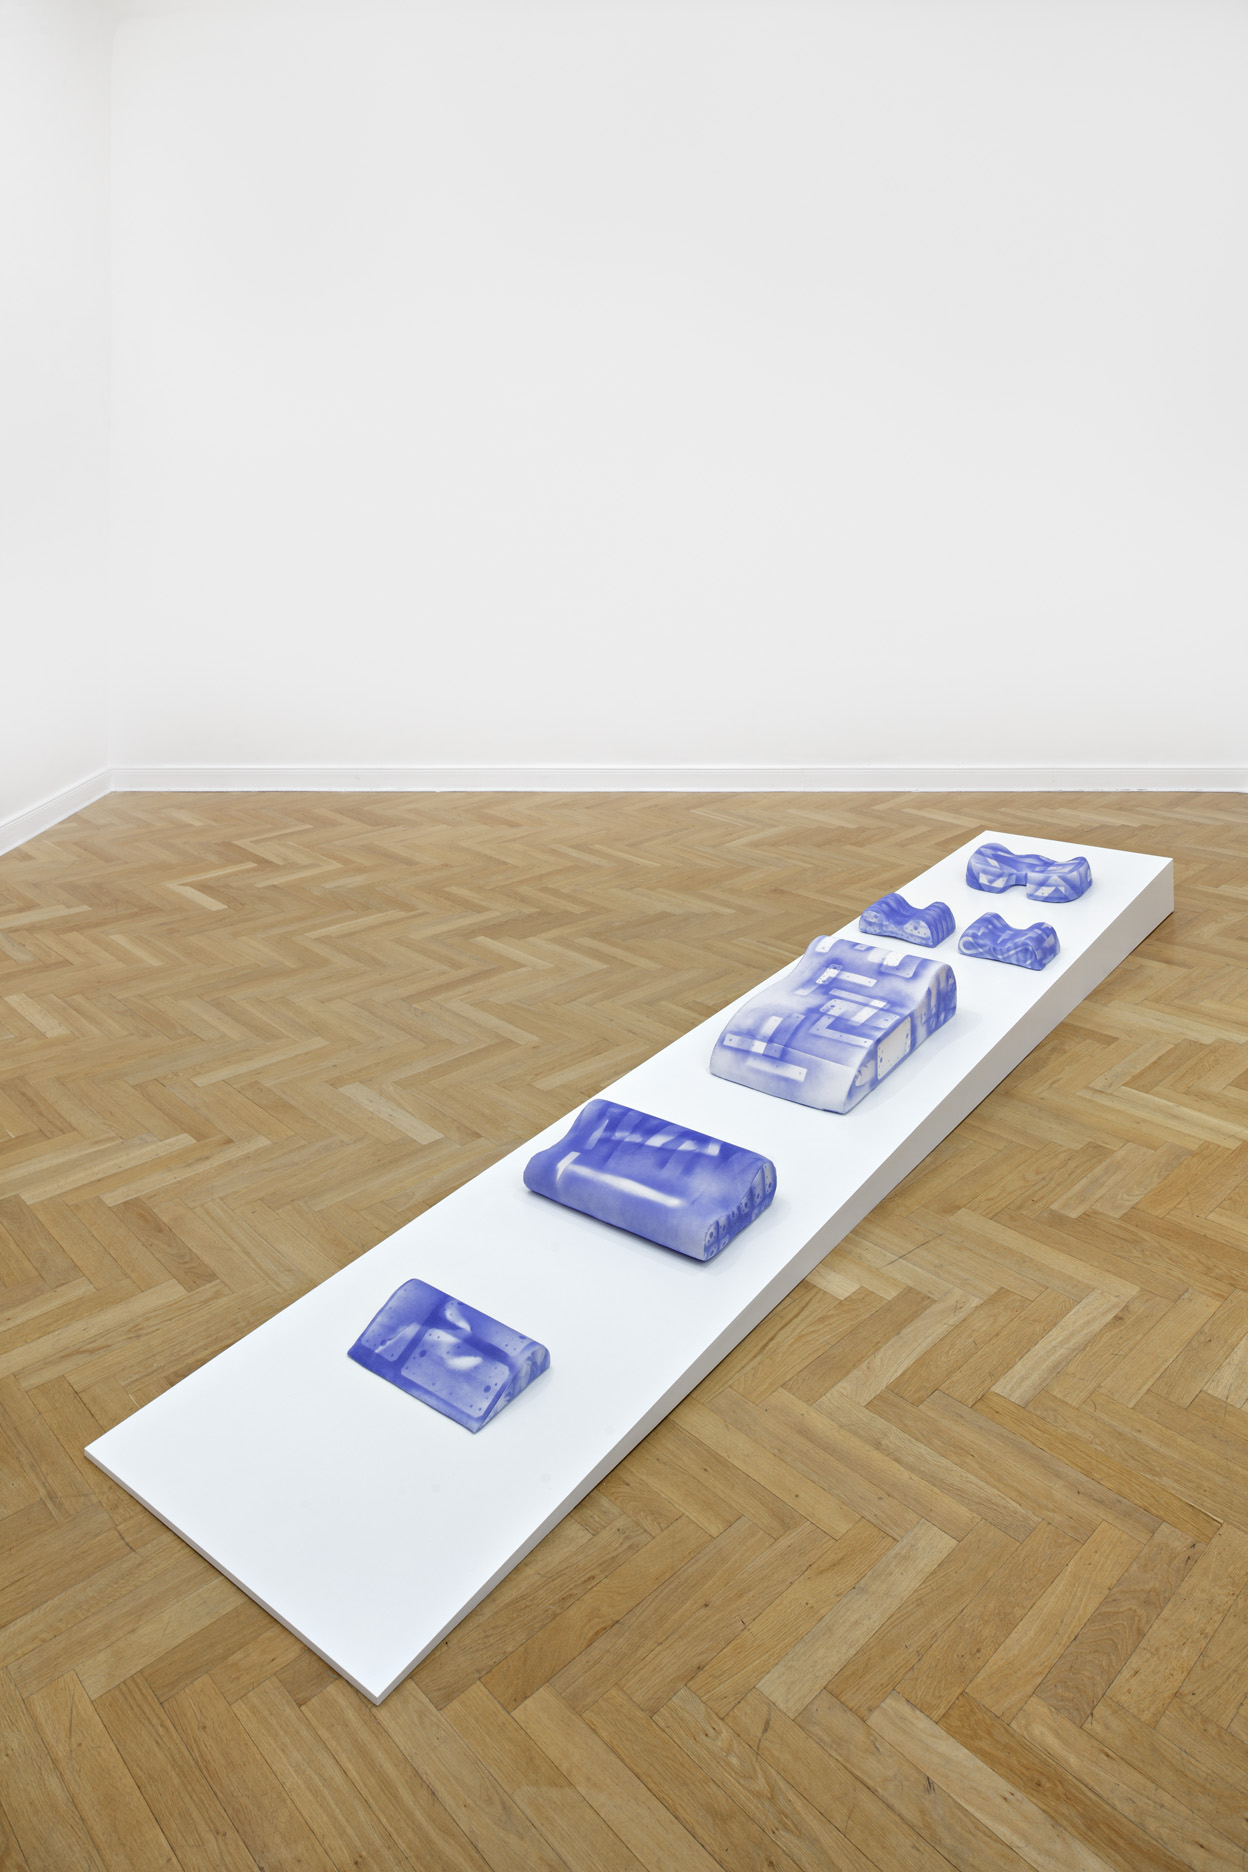 Nicholas Pelzer, 'Custom Utility' (2014) install view. Photo by Hans-Georg Gaul. Image courtesy Future Gallery.